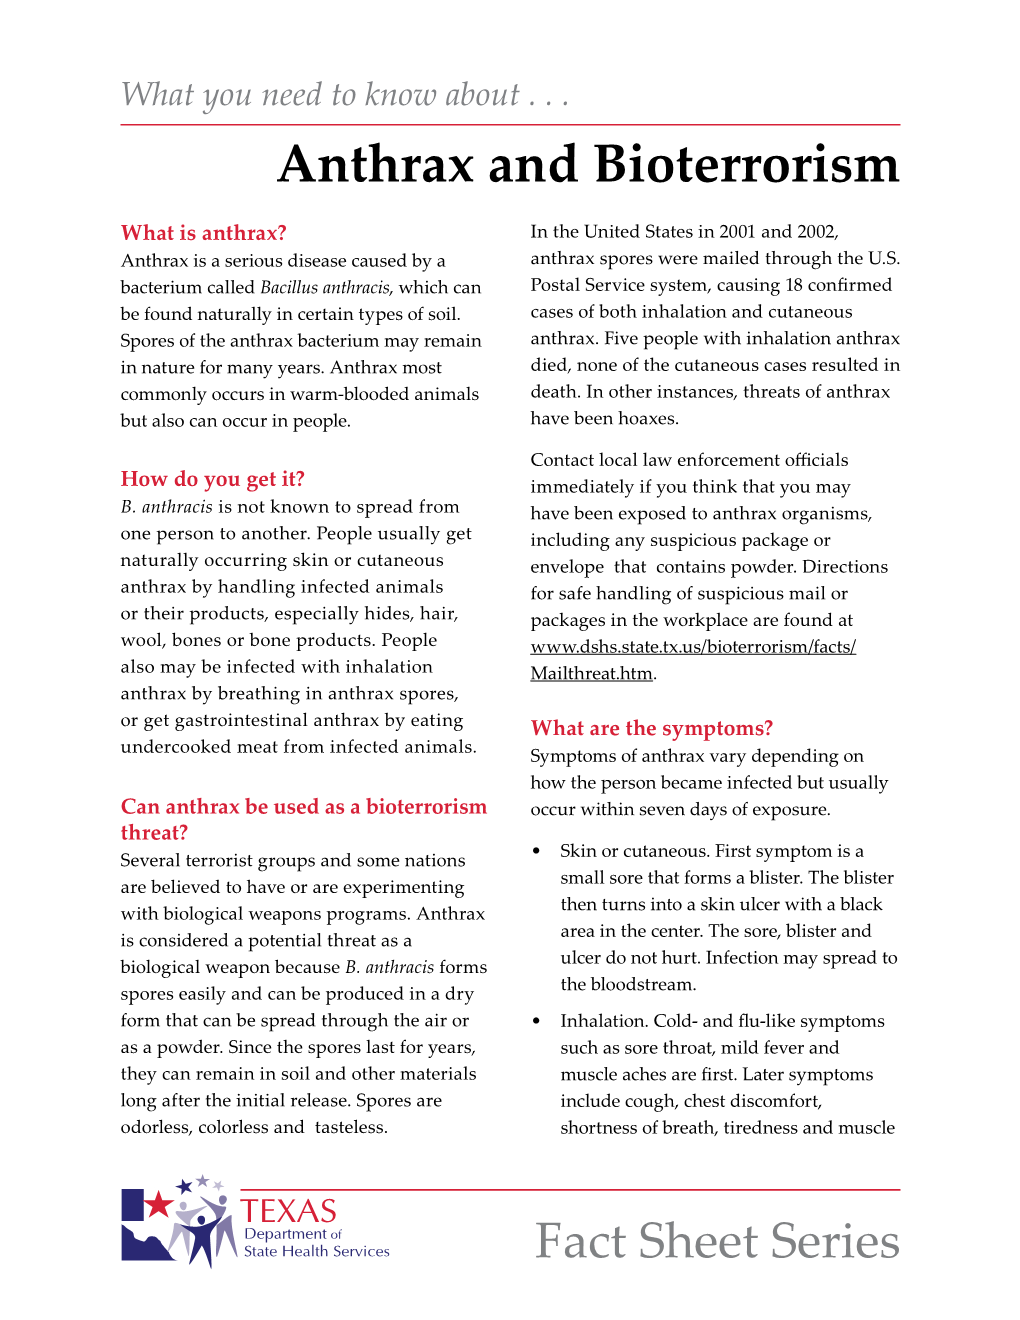 Anthrax and Bioterrorism